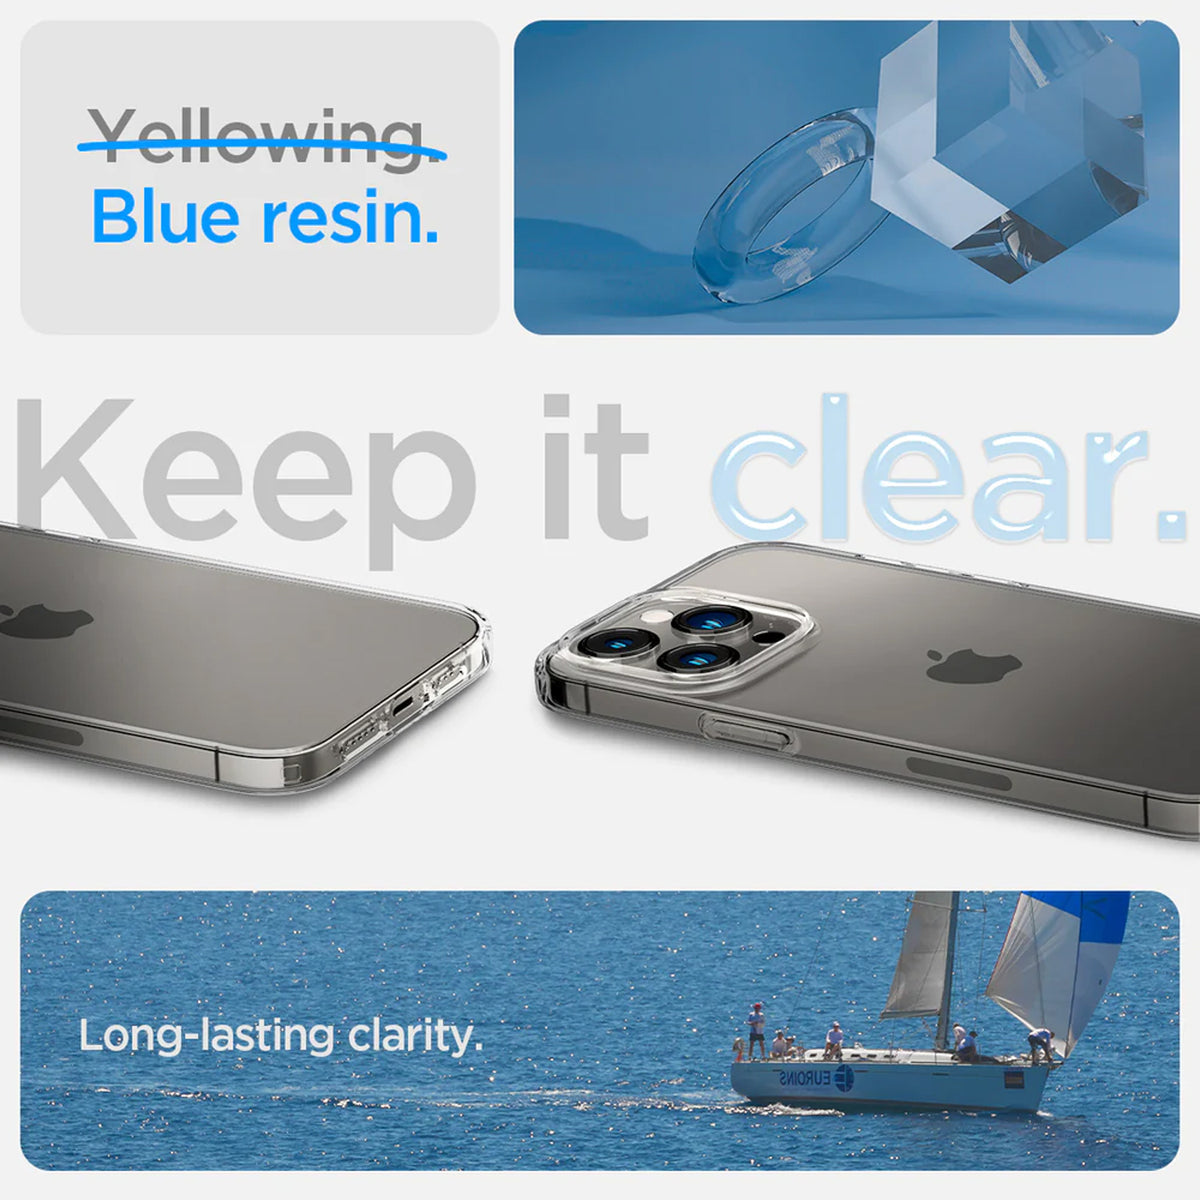 Spigen Liquid Crystal Case for iPhone 14 Series